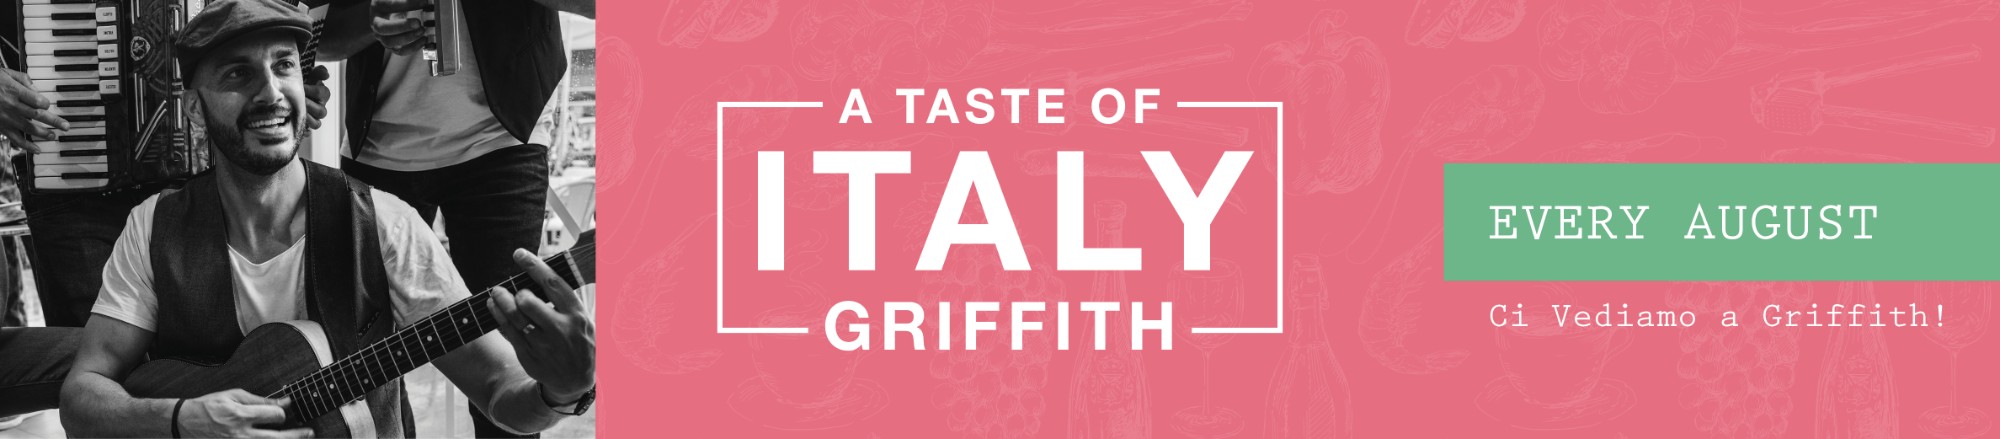 A Taste of Italy: Griffith